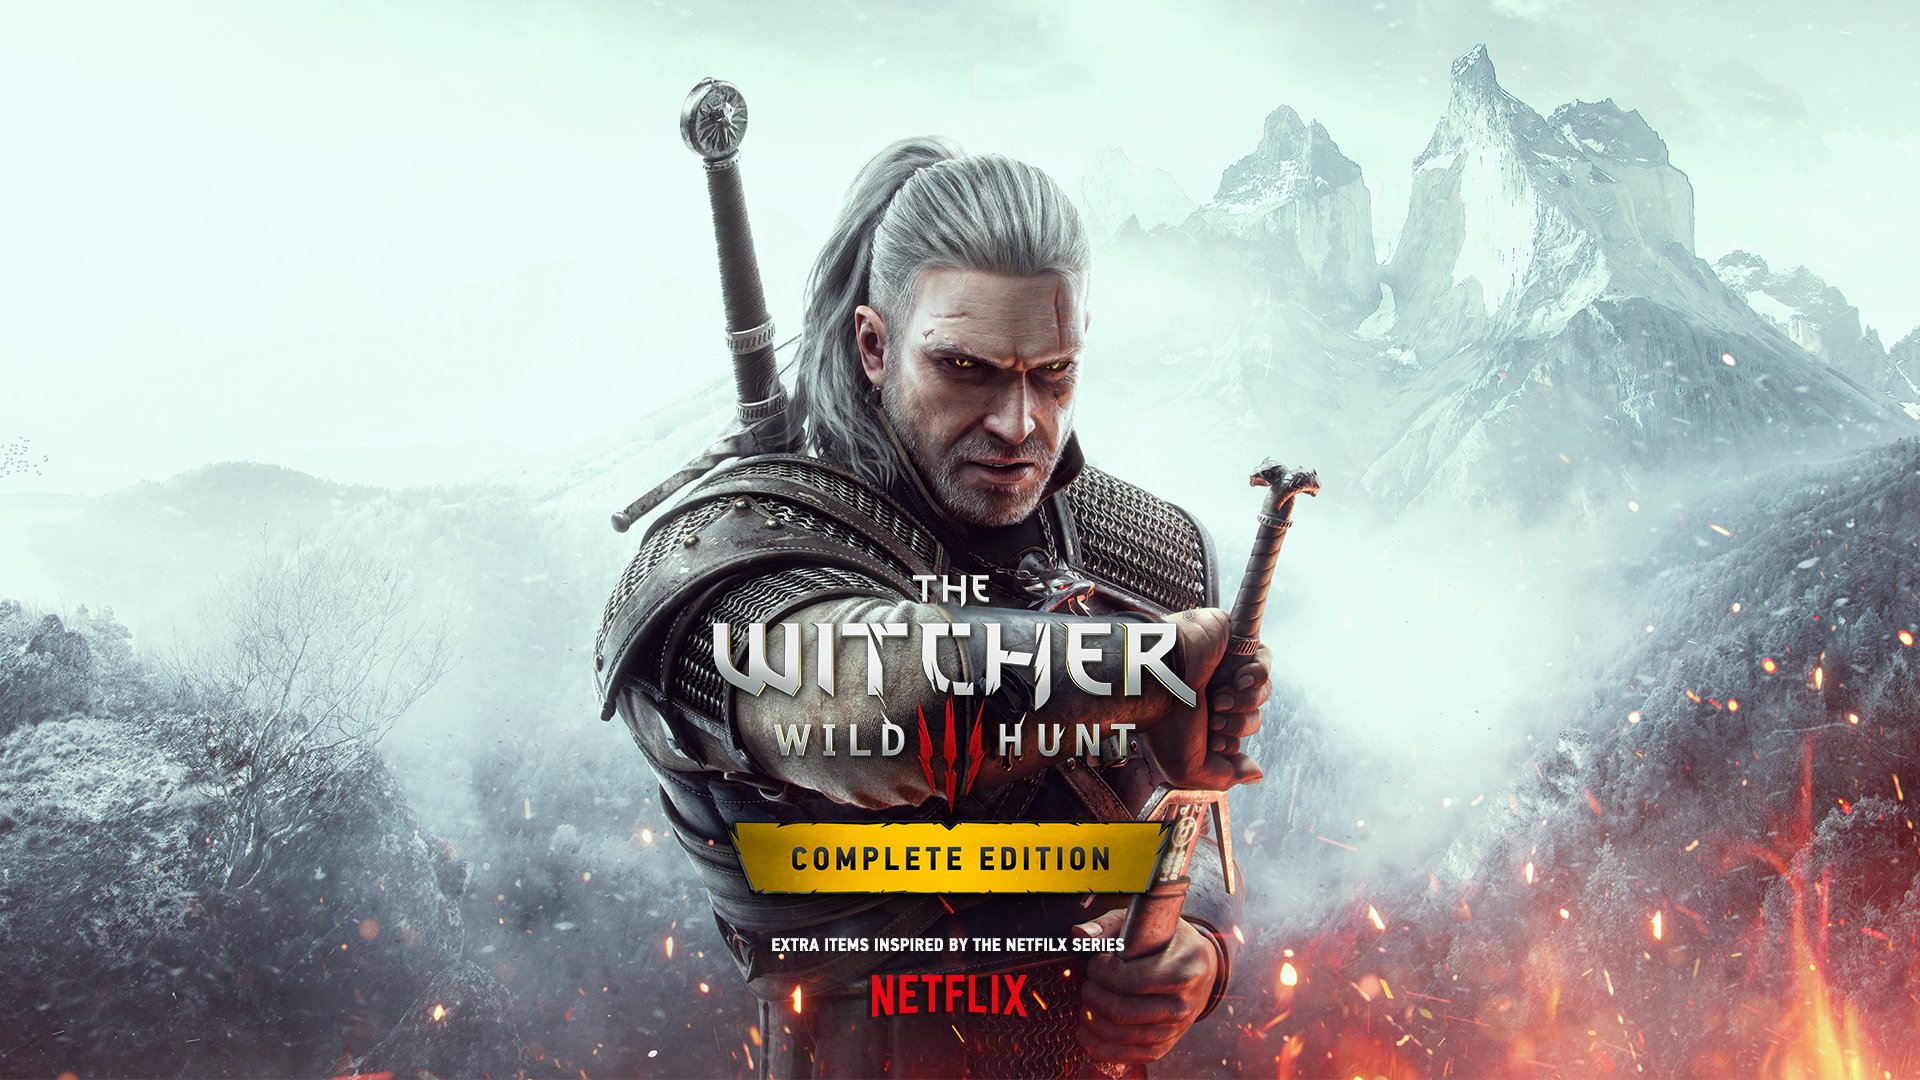 Witcher 3: Xbox Series X|S ಮತ್ತು PS5 ಗಾಗಿ ವೈಲ್ಡ್ ಹಂಟ್ ಕಂಪ್ಲೀಟ್ ಎಡಿಶನ್ Netflix-Show Inspired DLC ಅನ್ನು ಒಳಗೊಂಡಿರುತ್ತದೆ